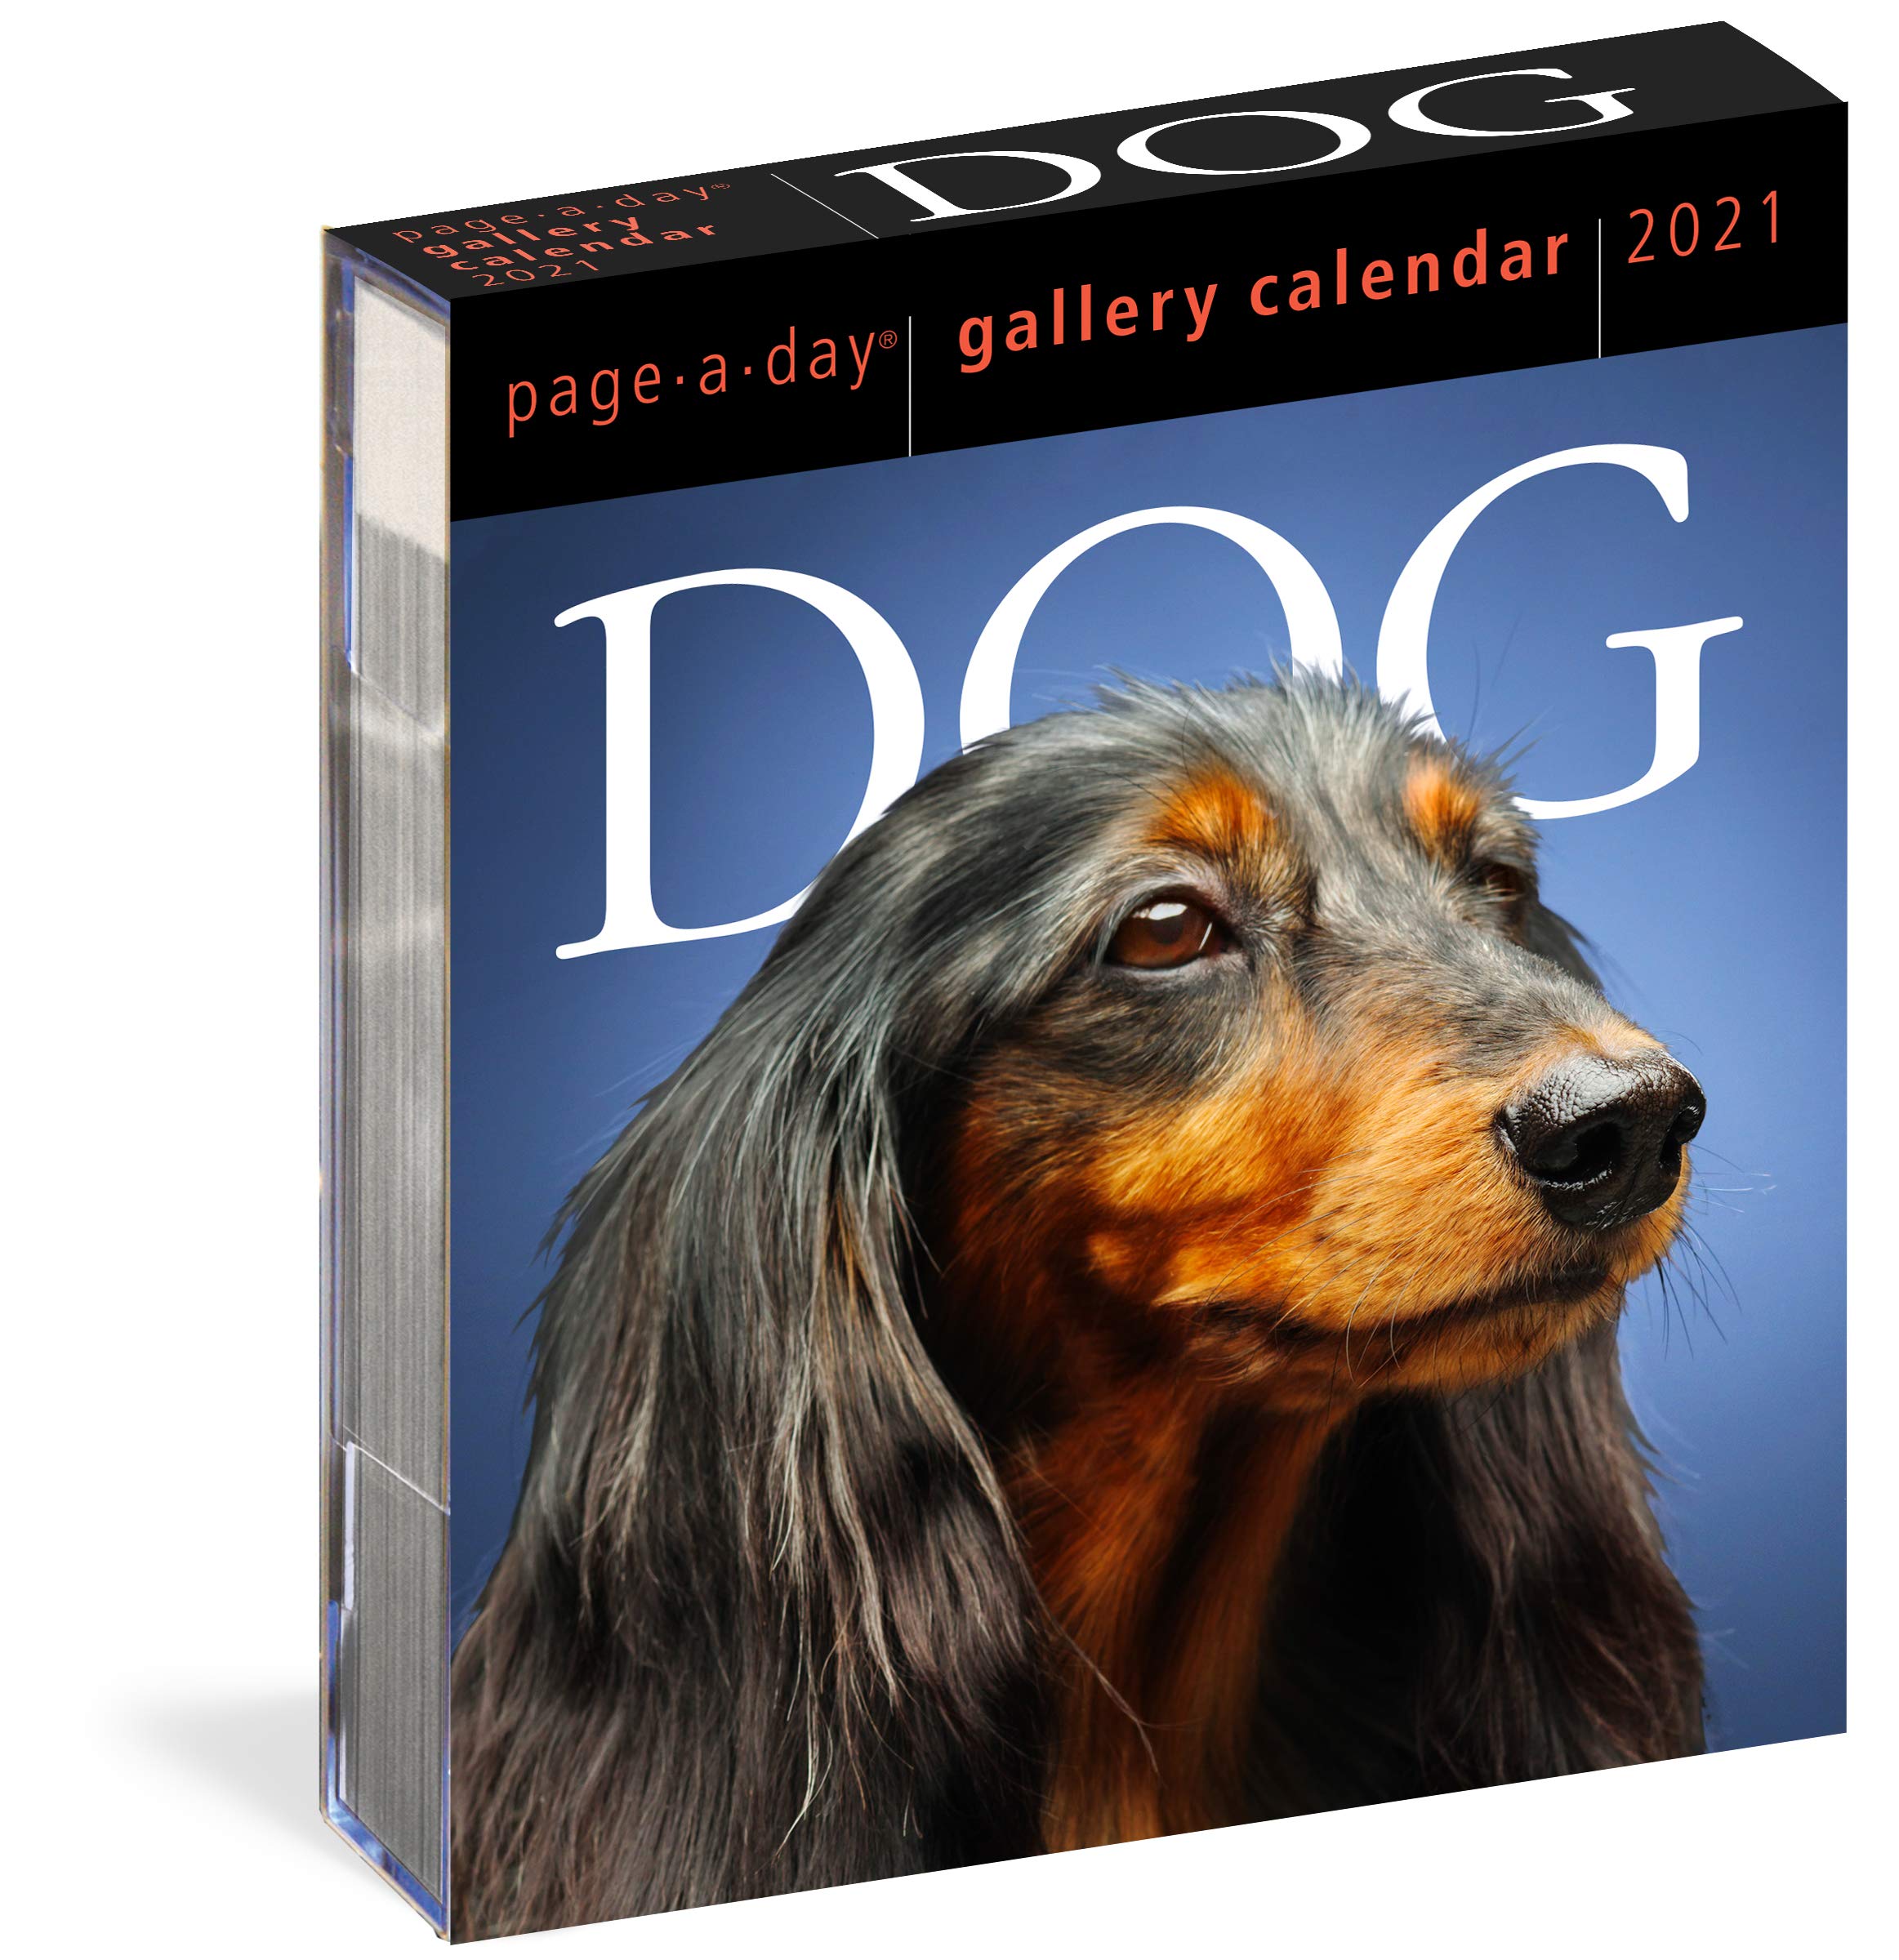 Dog Page-A-Day Gallery Calendar 2021Calendar - Day to Day Calendar, July 7, 2020